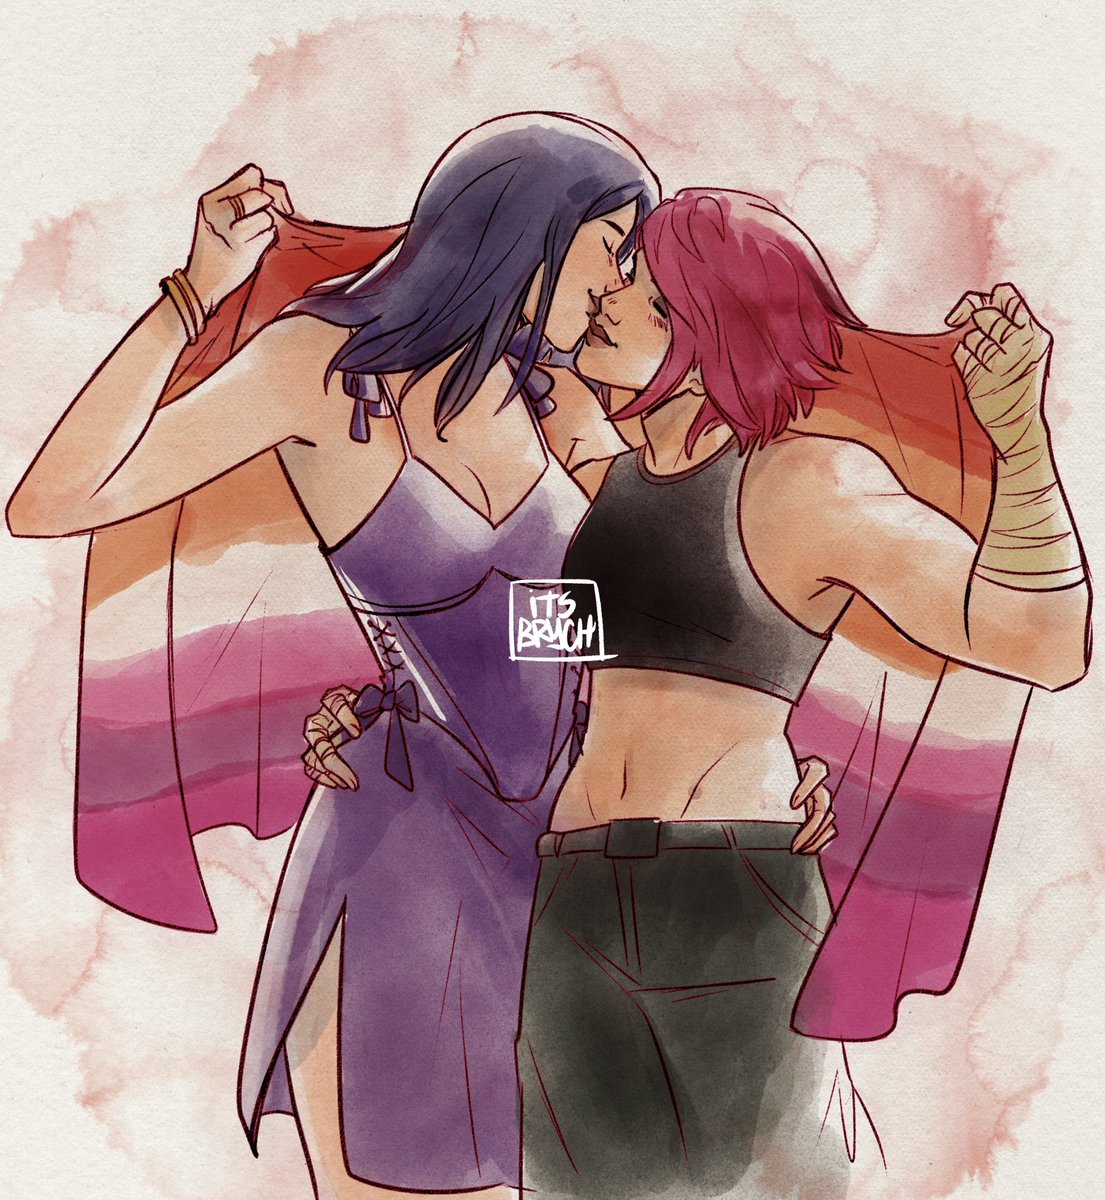 just a canon lesbian couple with the lesbian flag ✨

#CaitlynxVi #Arcane #piltoversfinest #ArtofLegends #LeagueOfLegends #ArtofArcane #Caitvi #violyn #Pride2023